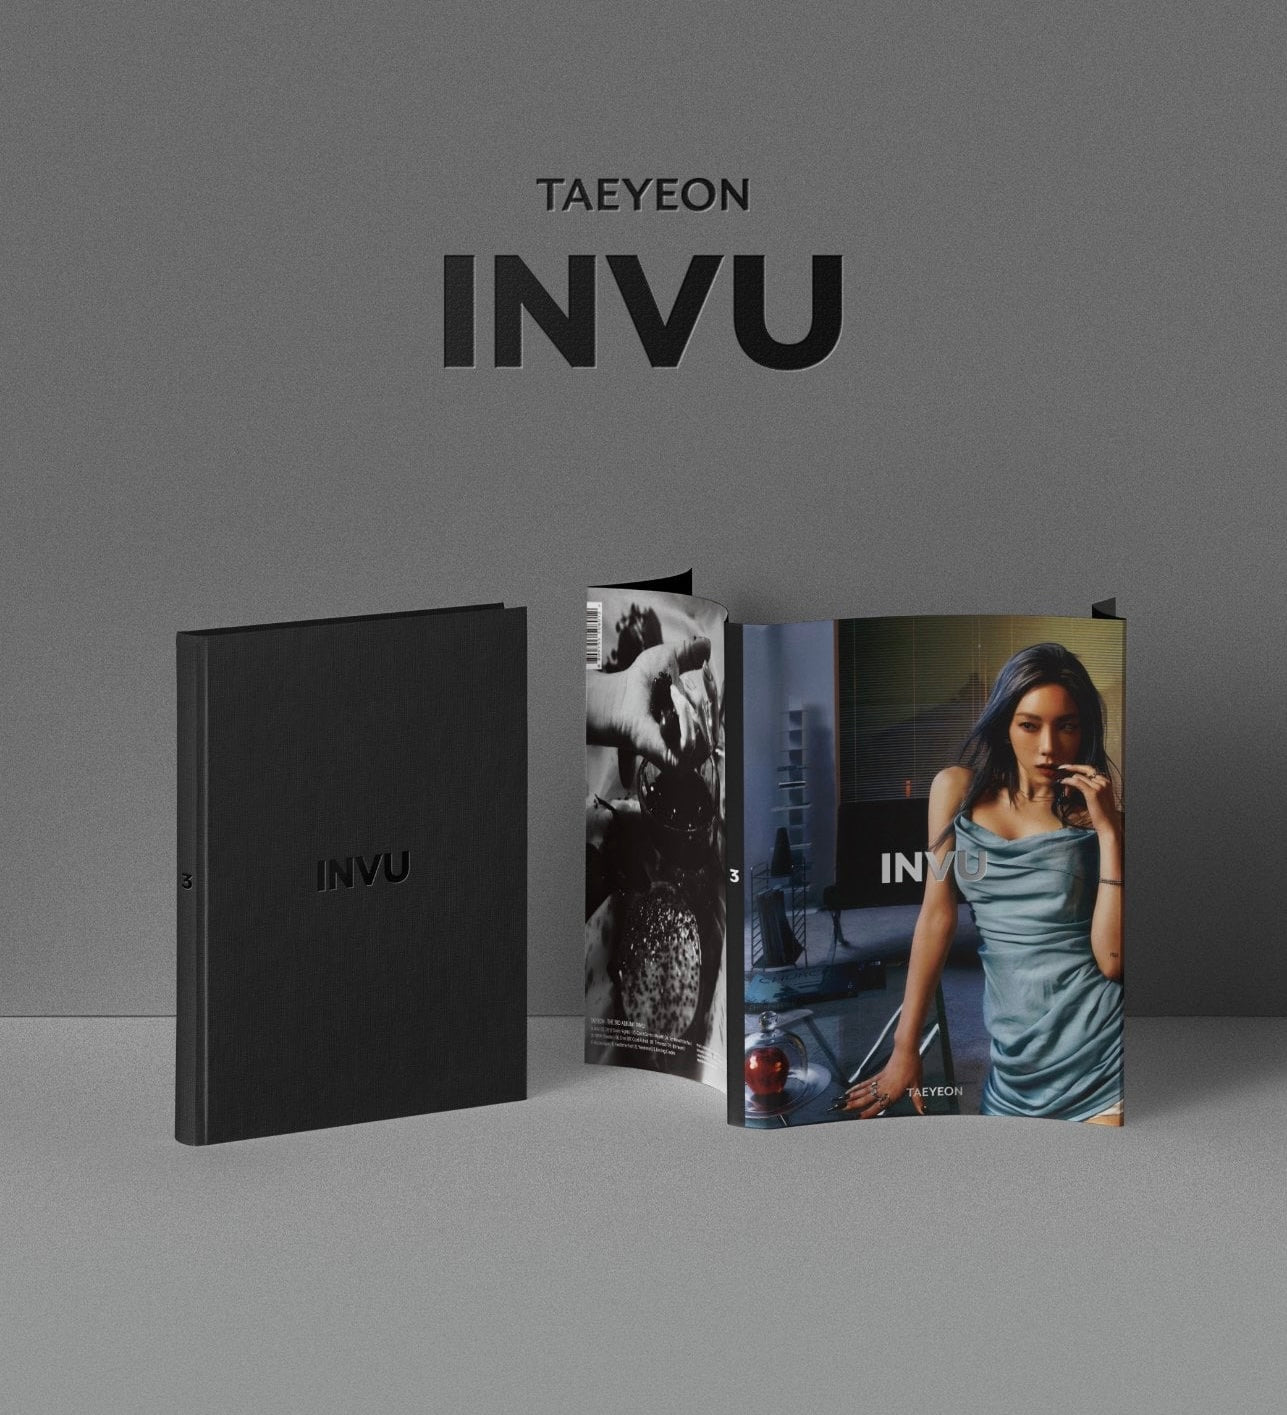 Taeyeon - INVU